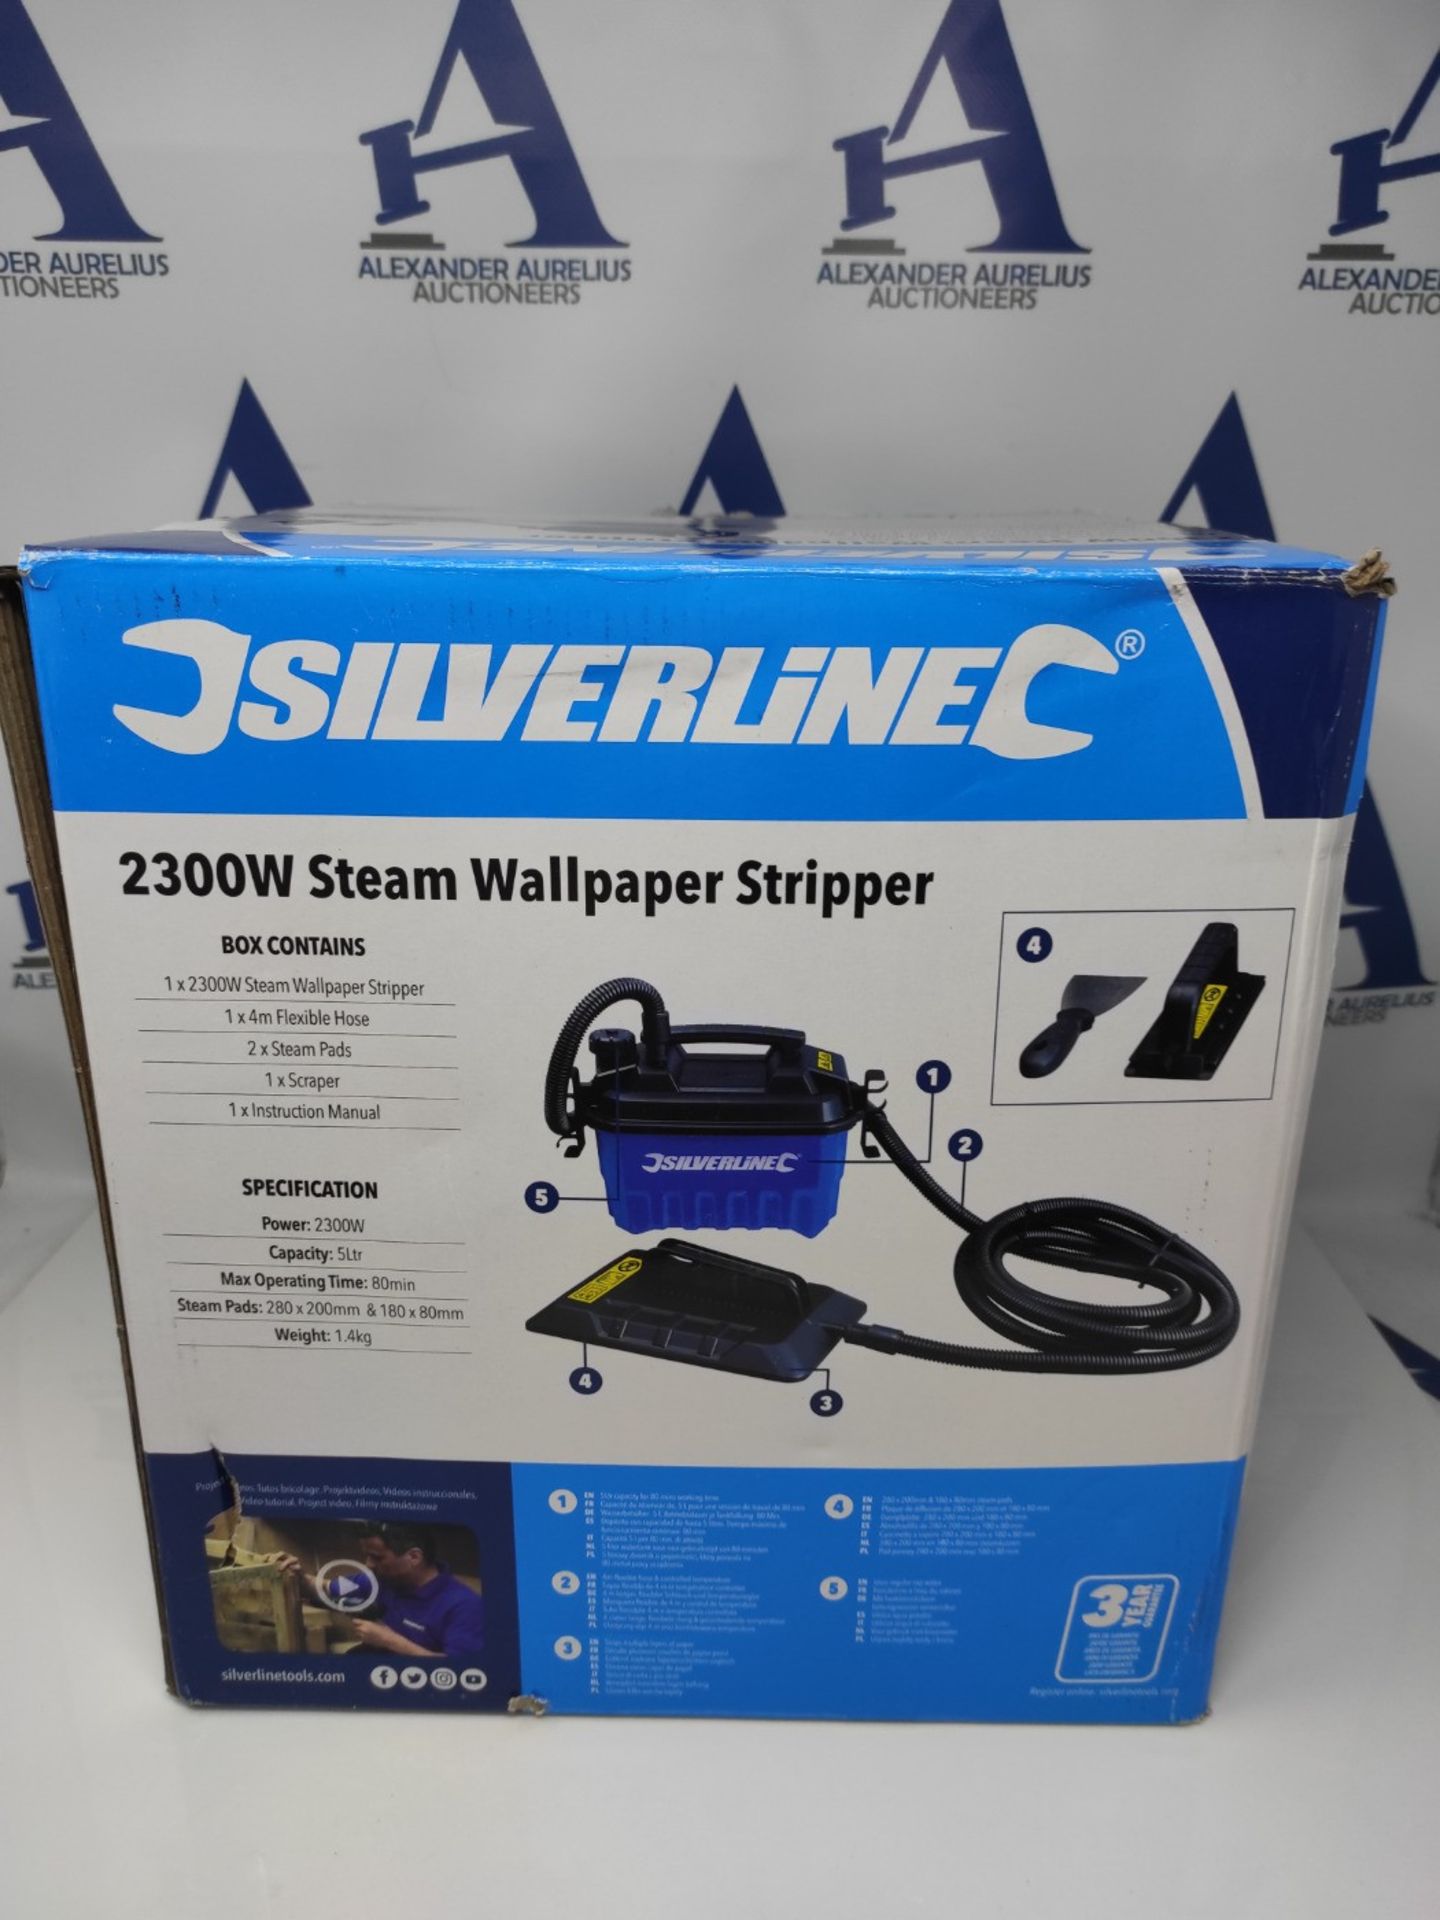 Silverline 2300W Steam Wallpaper Stripper (296457) - Image 2 of 3